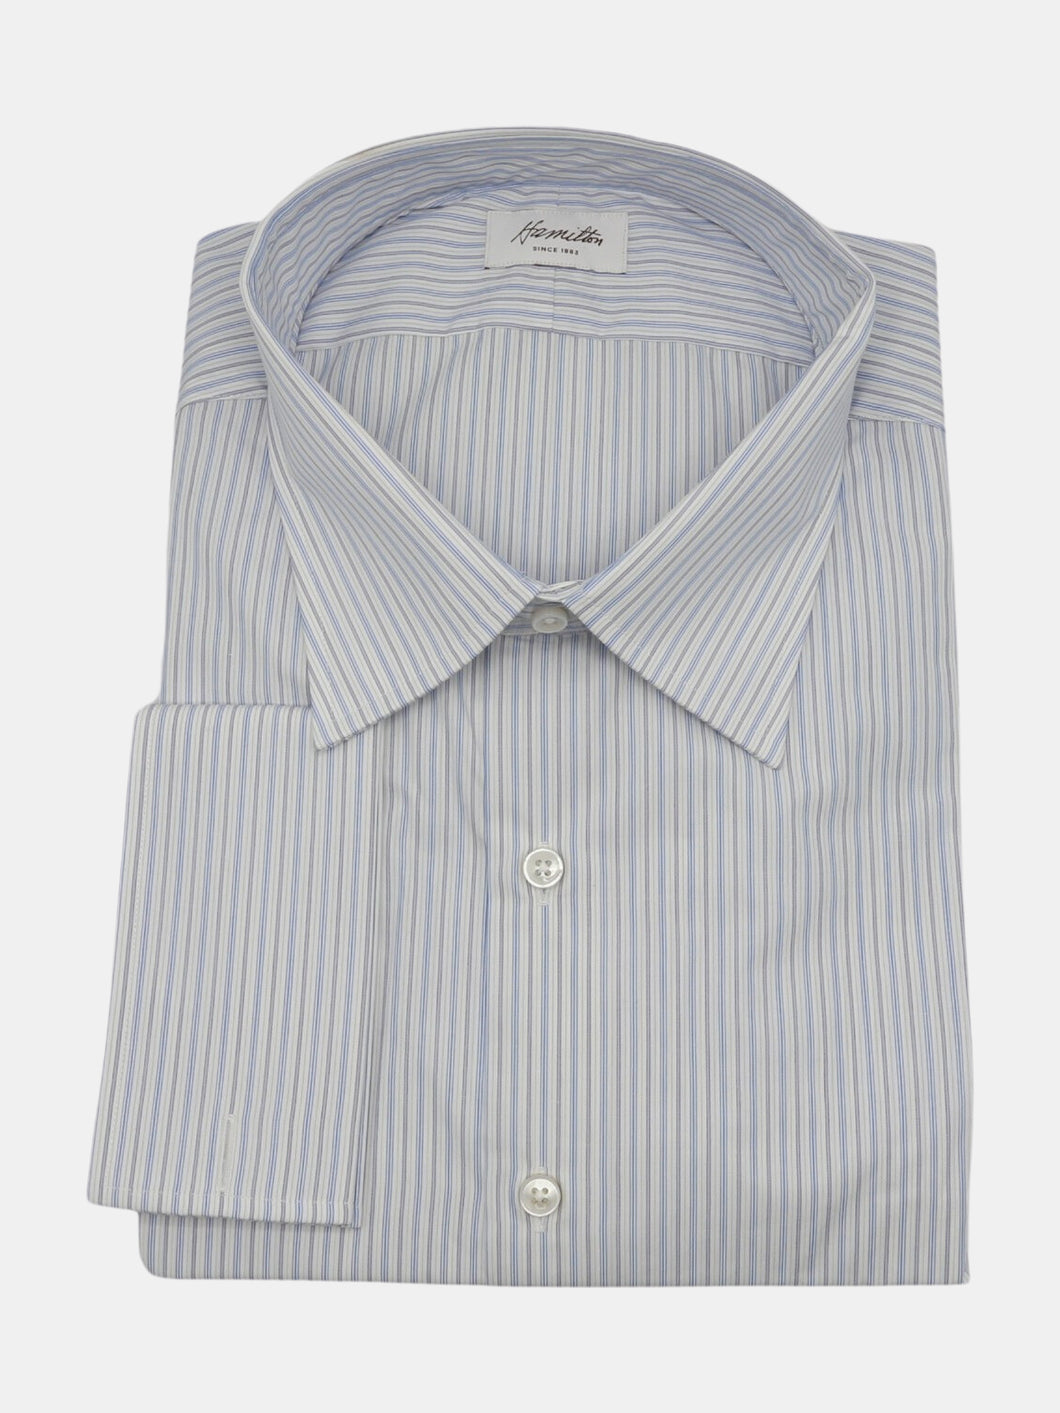 Hamilton Men's Blue / Grey White Stripe Dress Shirt Casual Button-Down - 52-18.5